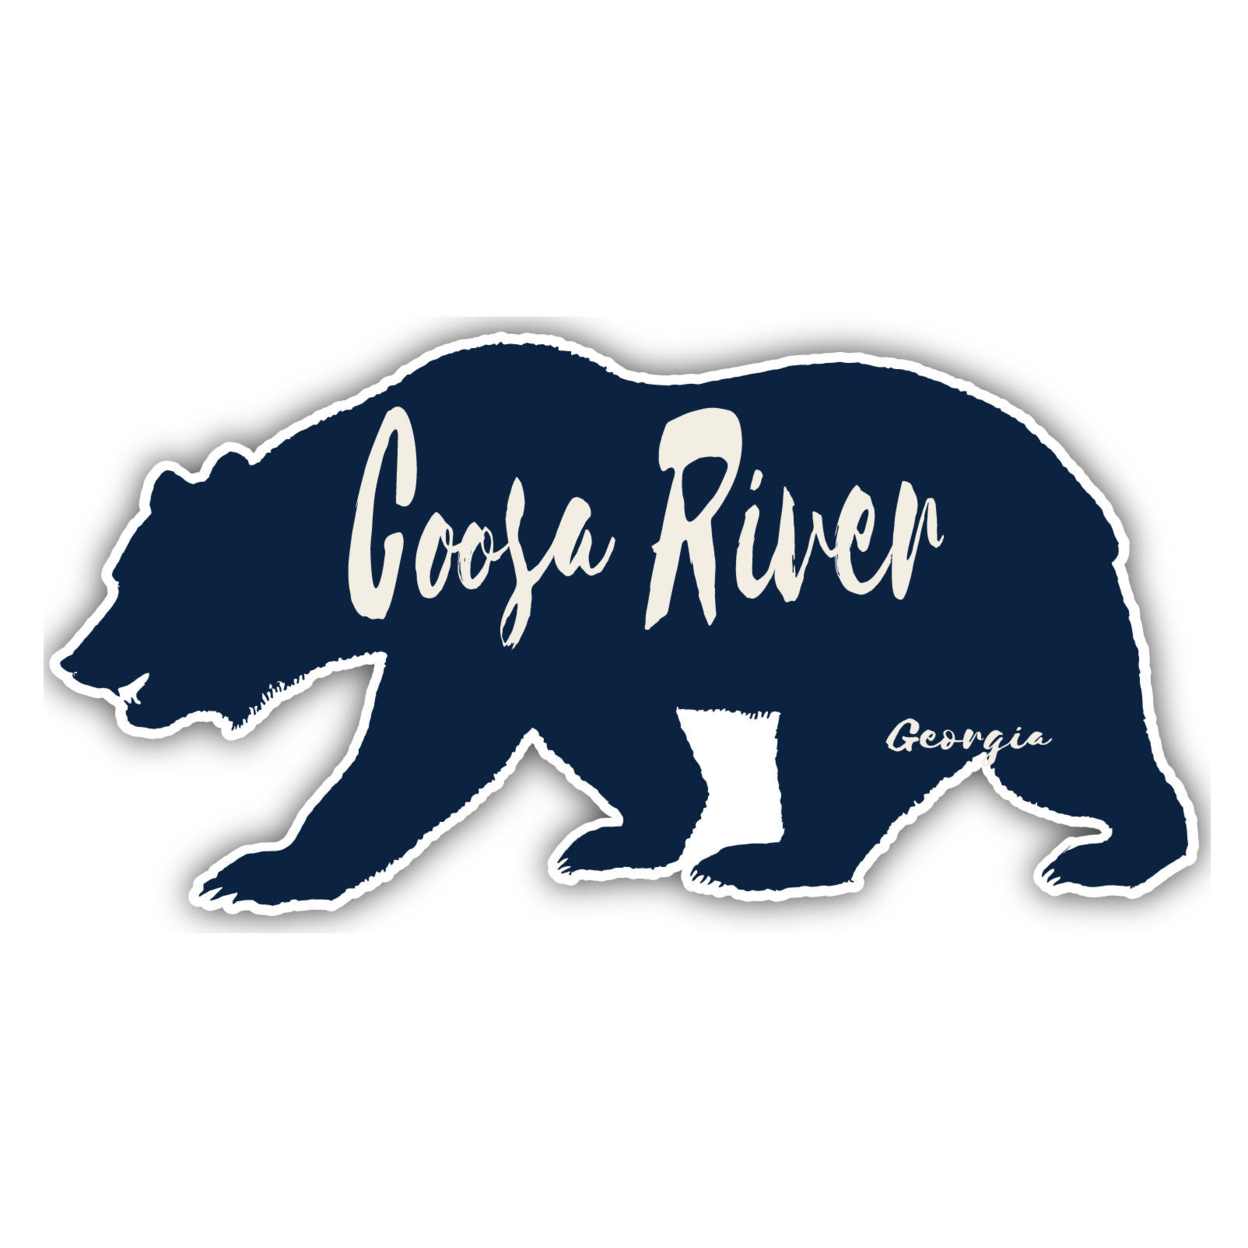 Coosa River Georgia Souvenir Decorative Stickers (Choose Theme And Size) - Single Unit, 2-Inch, Bear